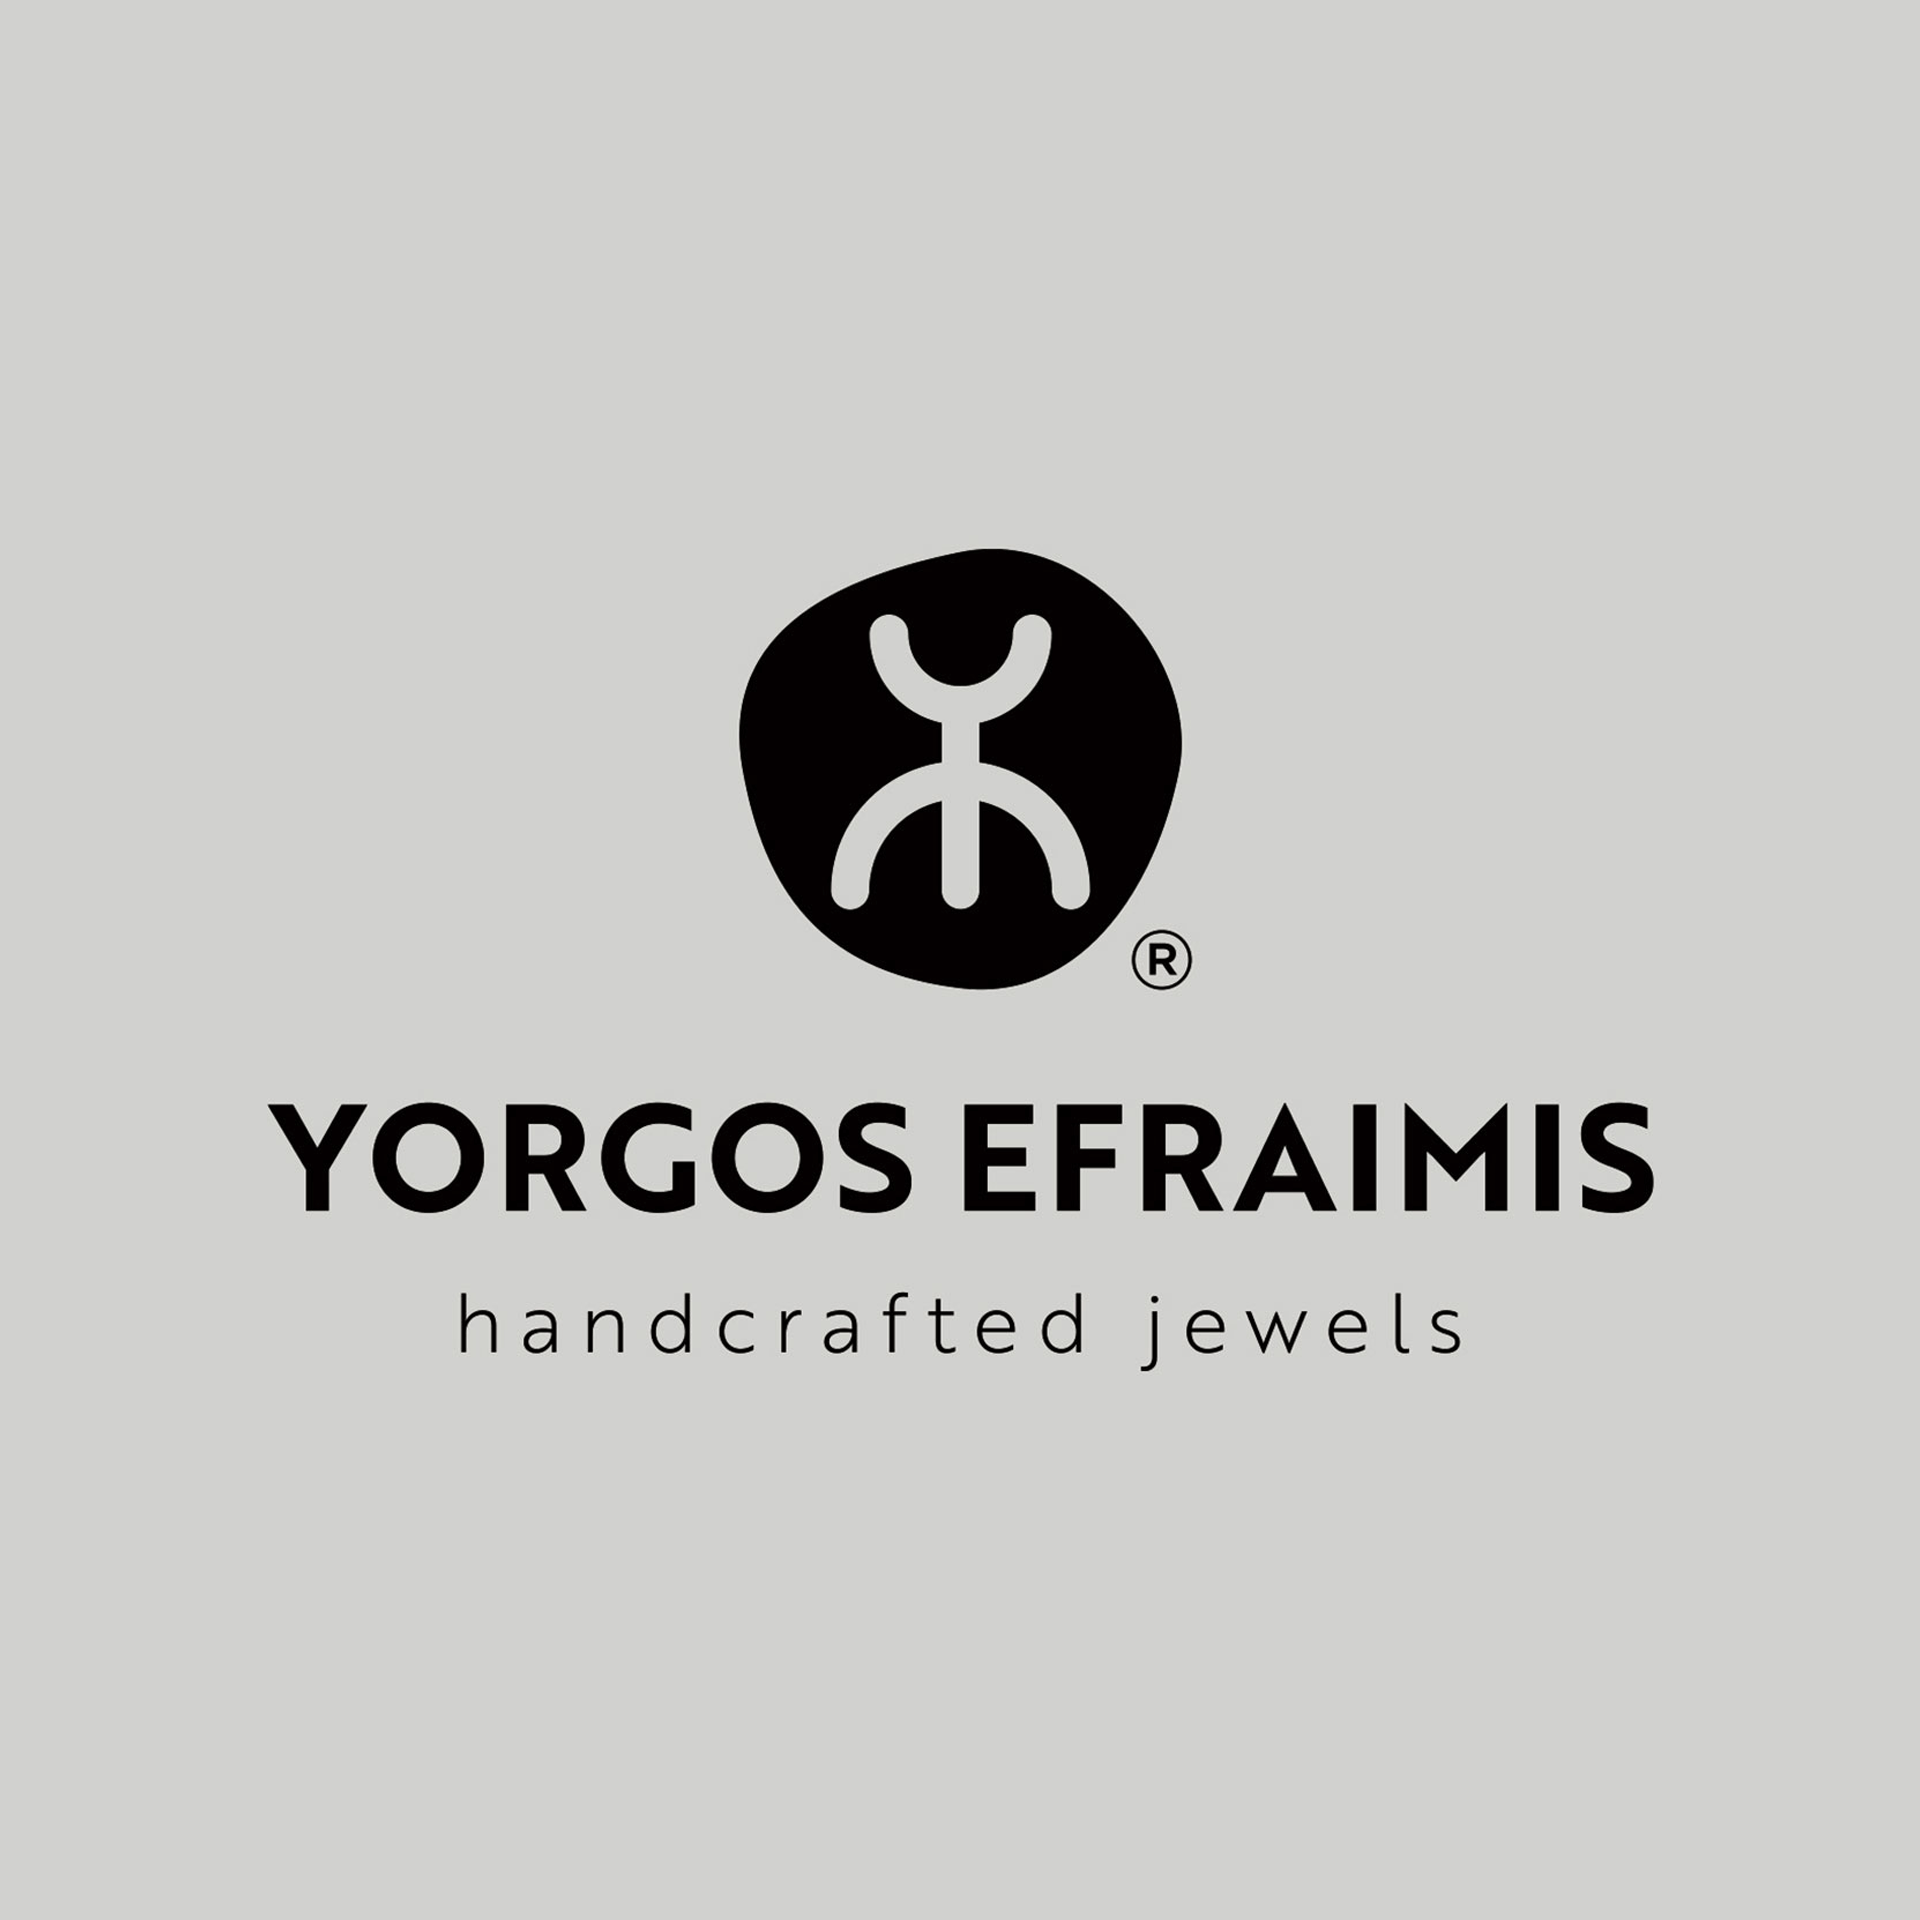 yorgos-efraimis-handcrafted-jewels-logo-06